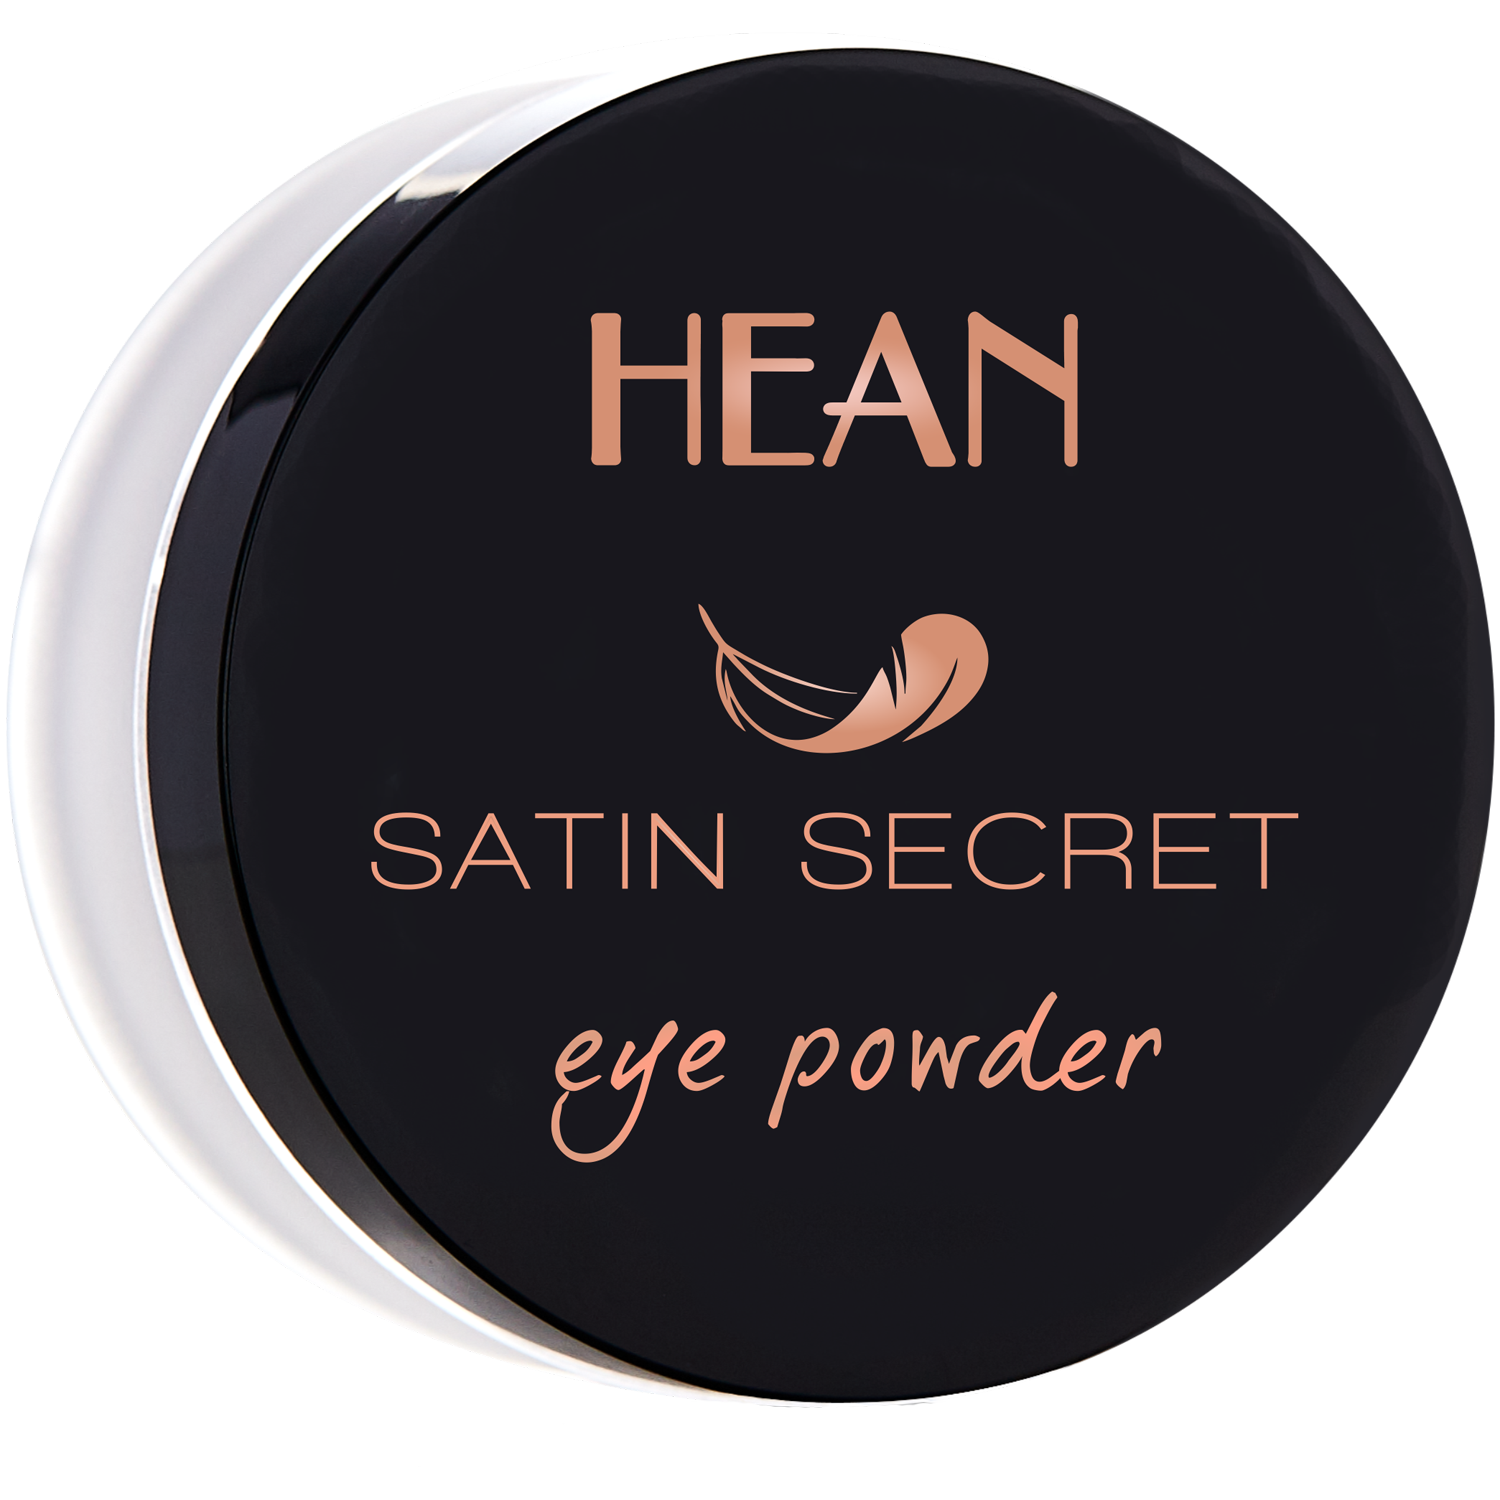 Hean Satin Secret puder sypki pod oczy, 5 g | hebe.pl